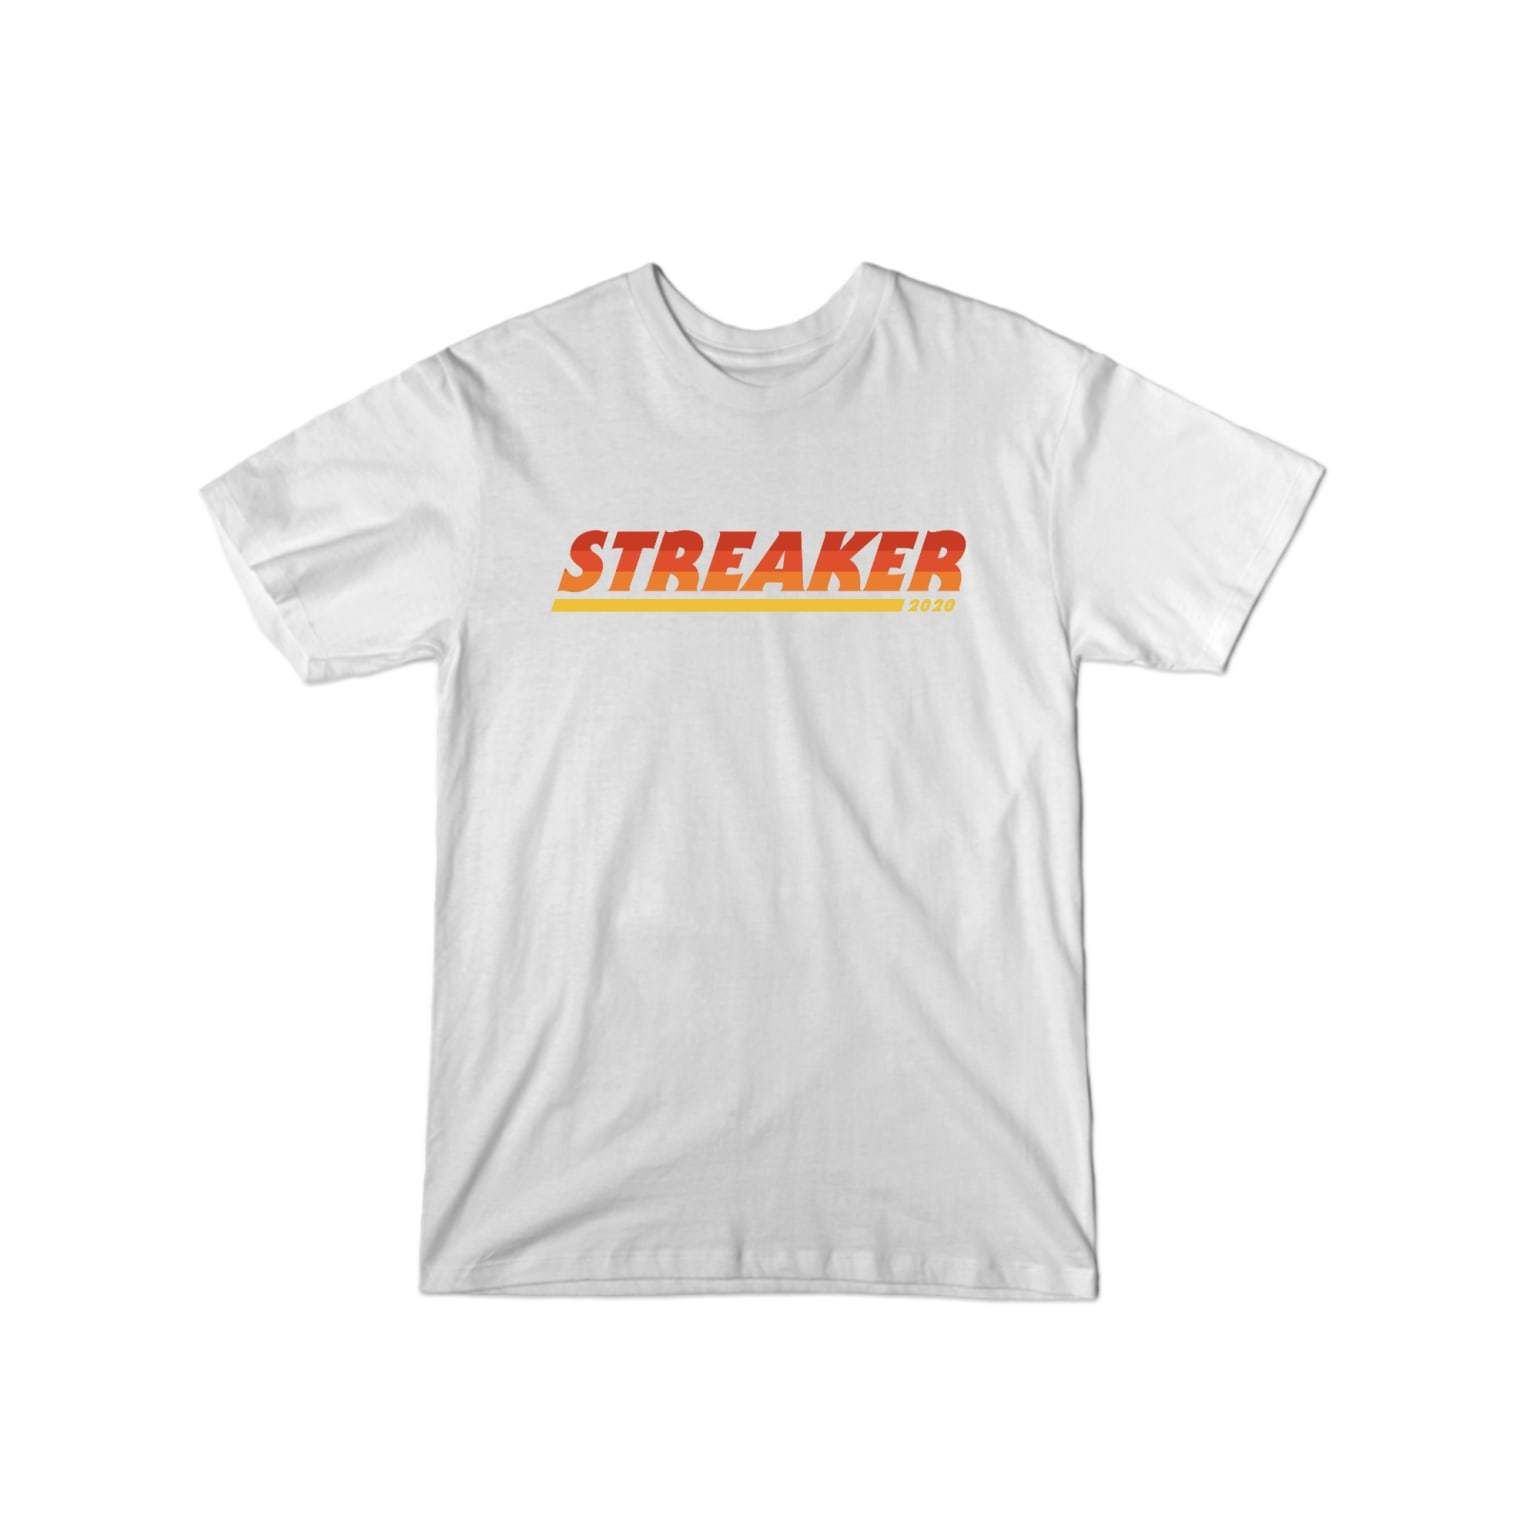 Streaker 2020 Tee